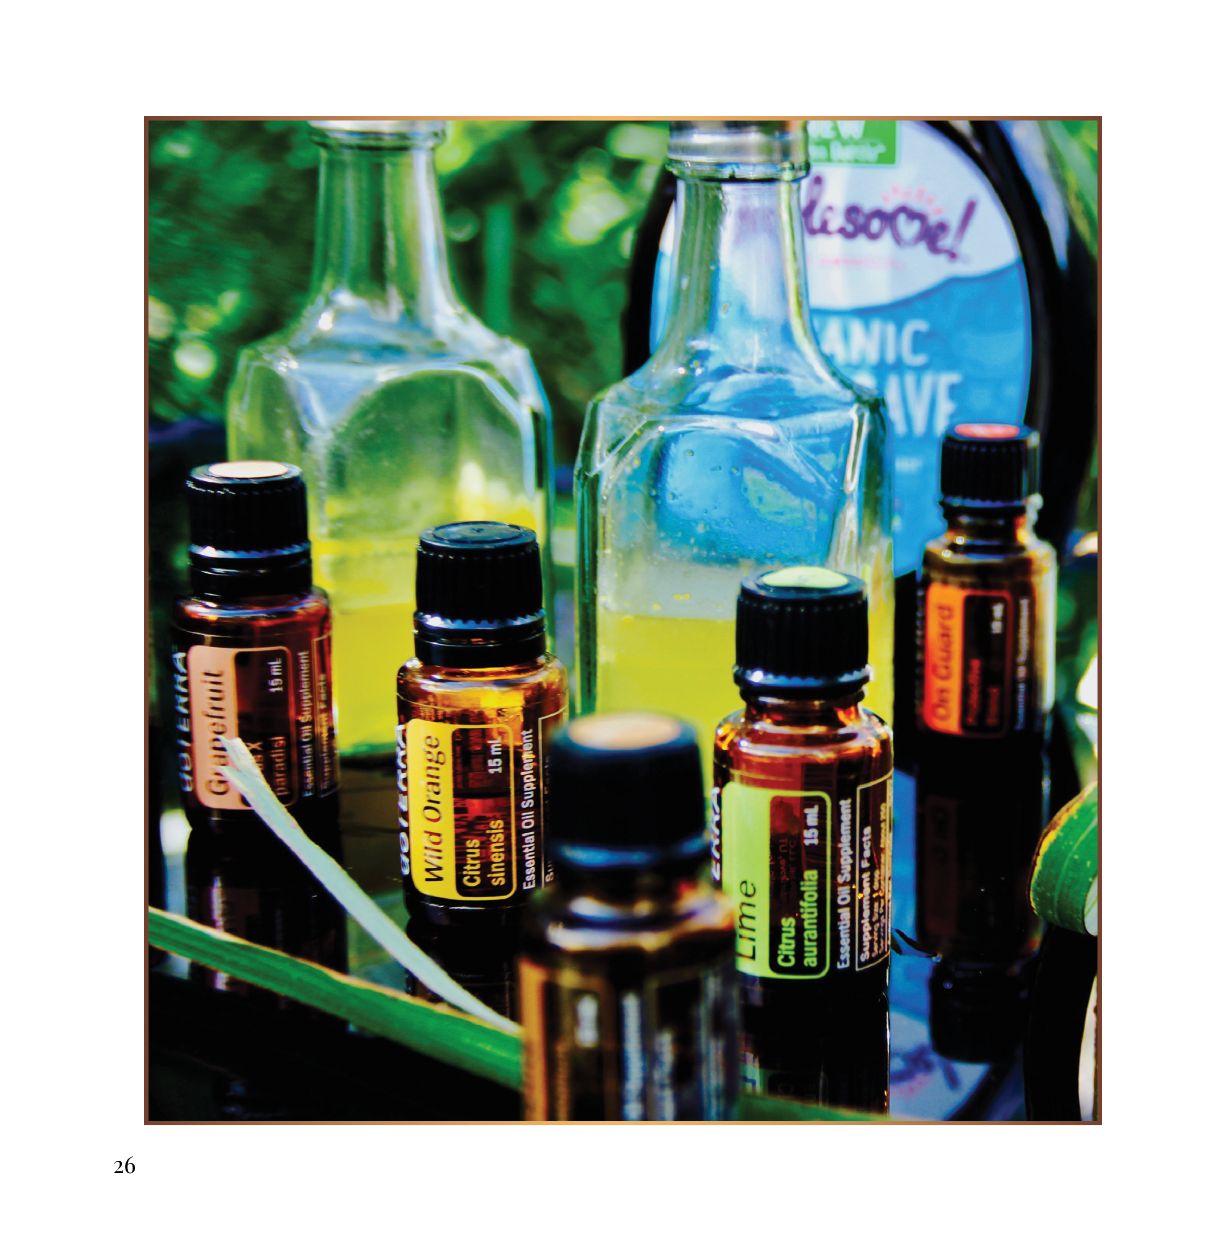 The Essential Mixologist 22 original essential oil infused recipes - photo 26